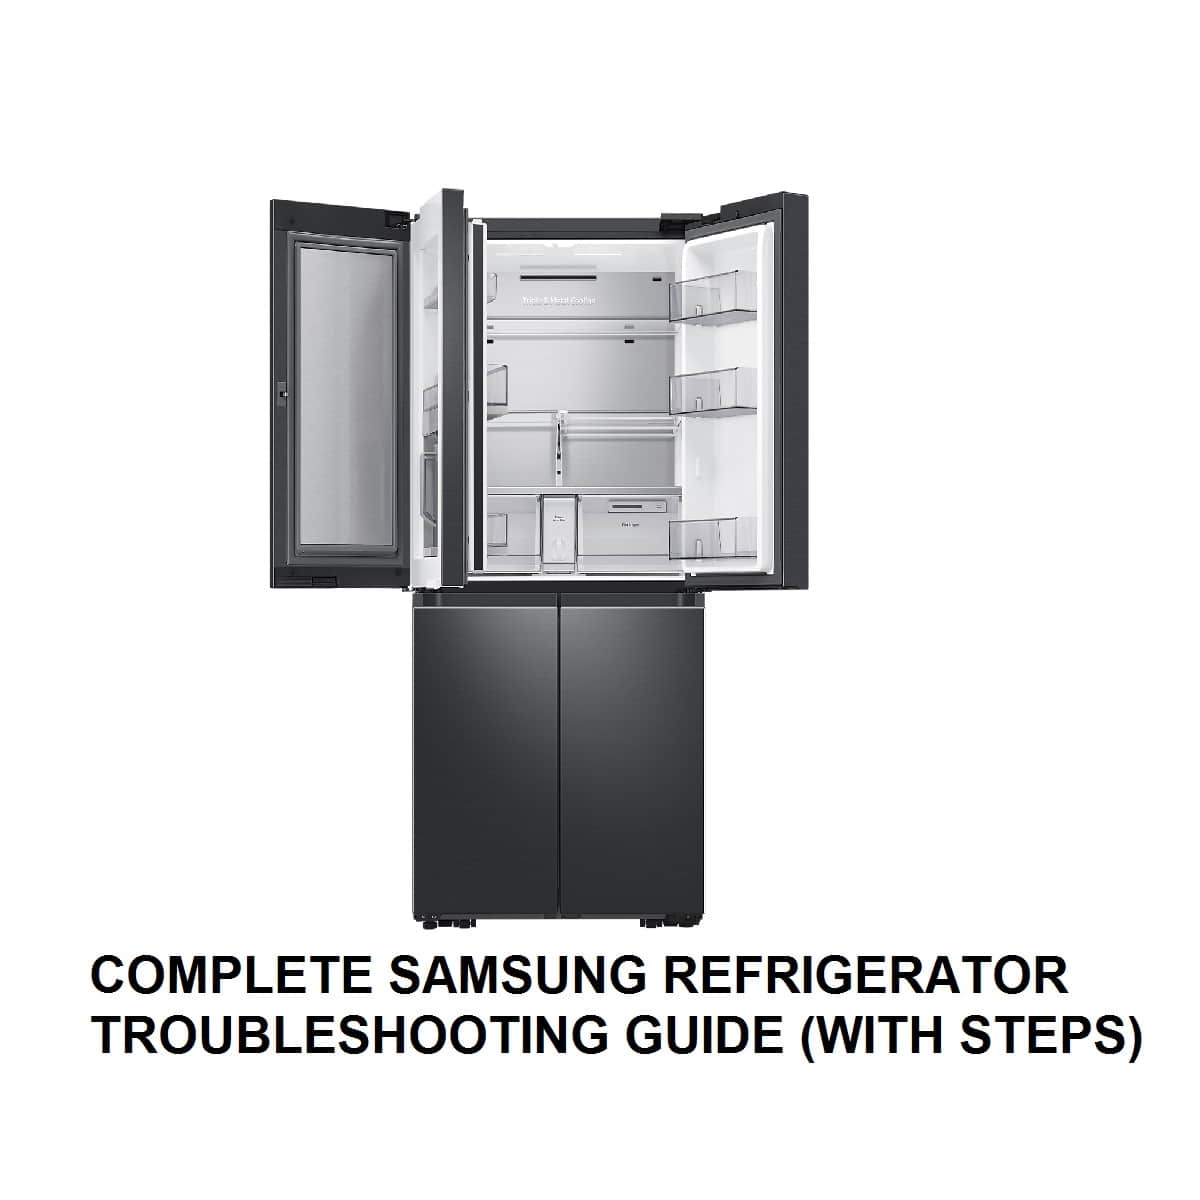 Samsung refrigerator troubleshooting manual